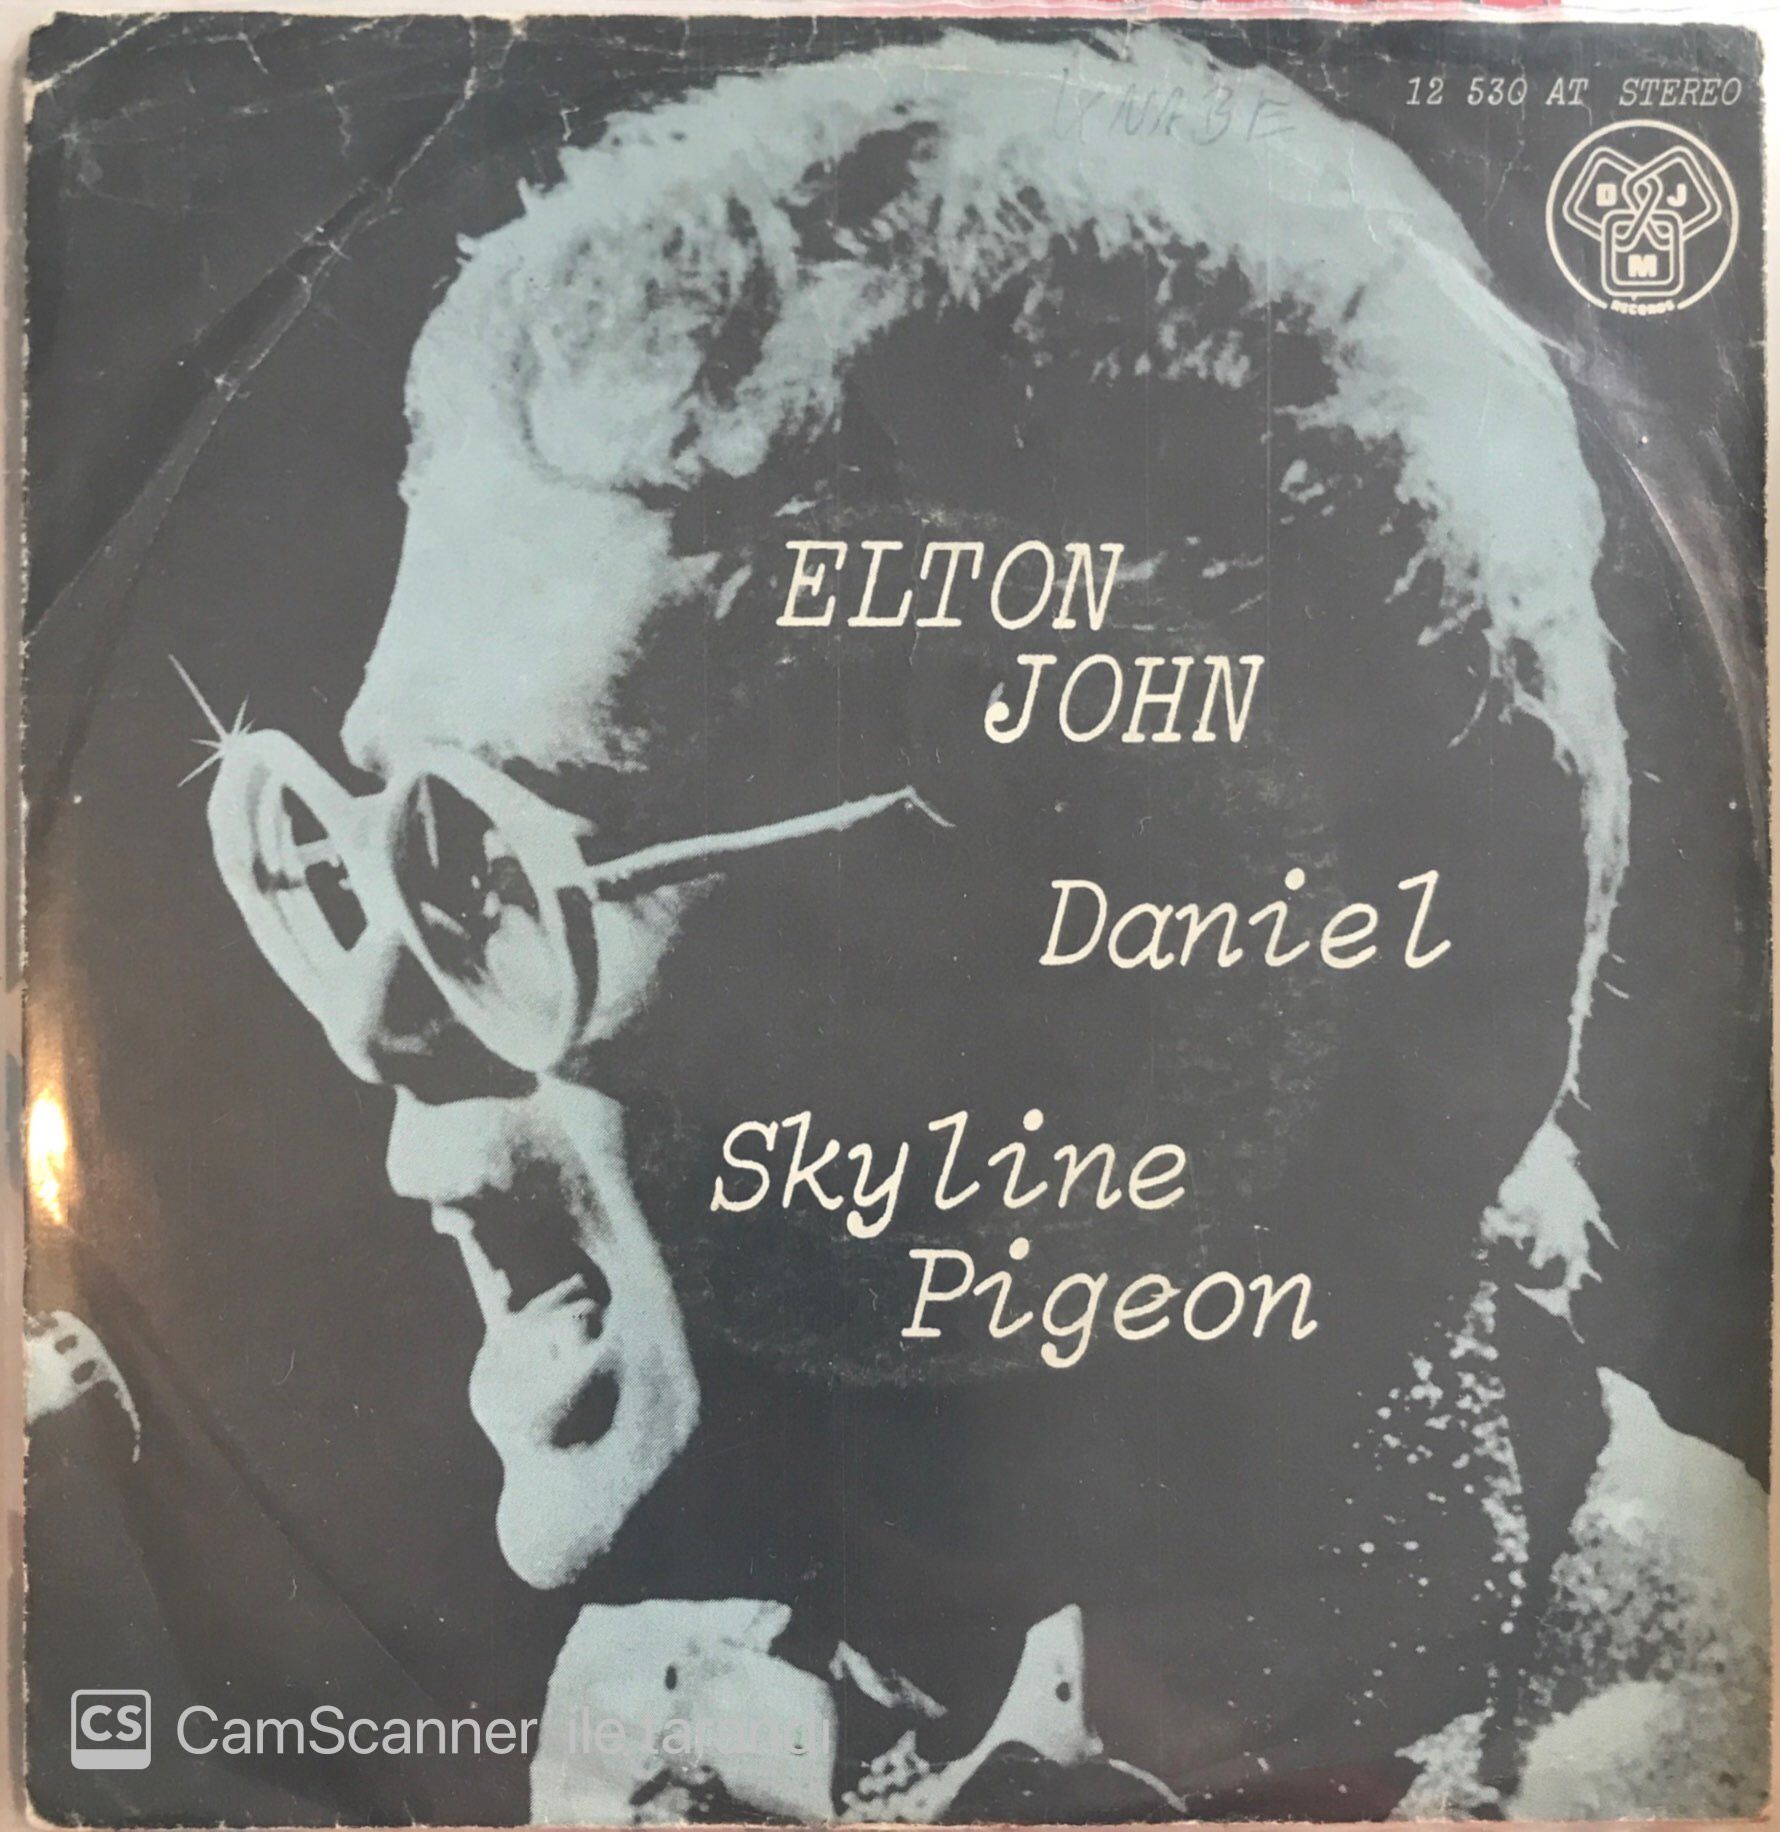 Elton John - Daniel 45lik